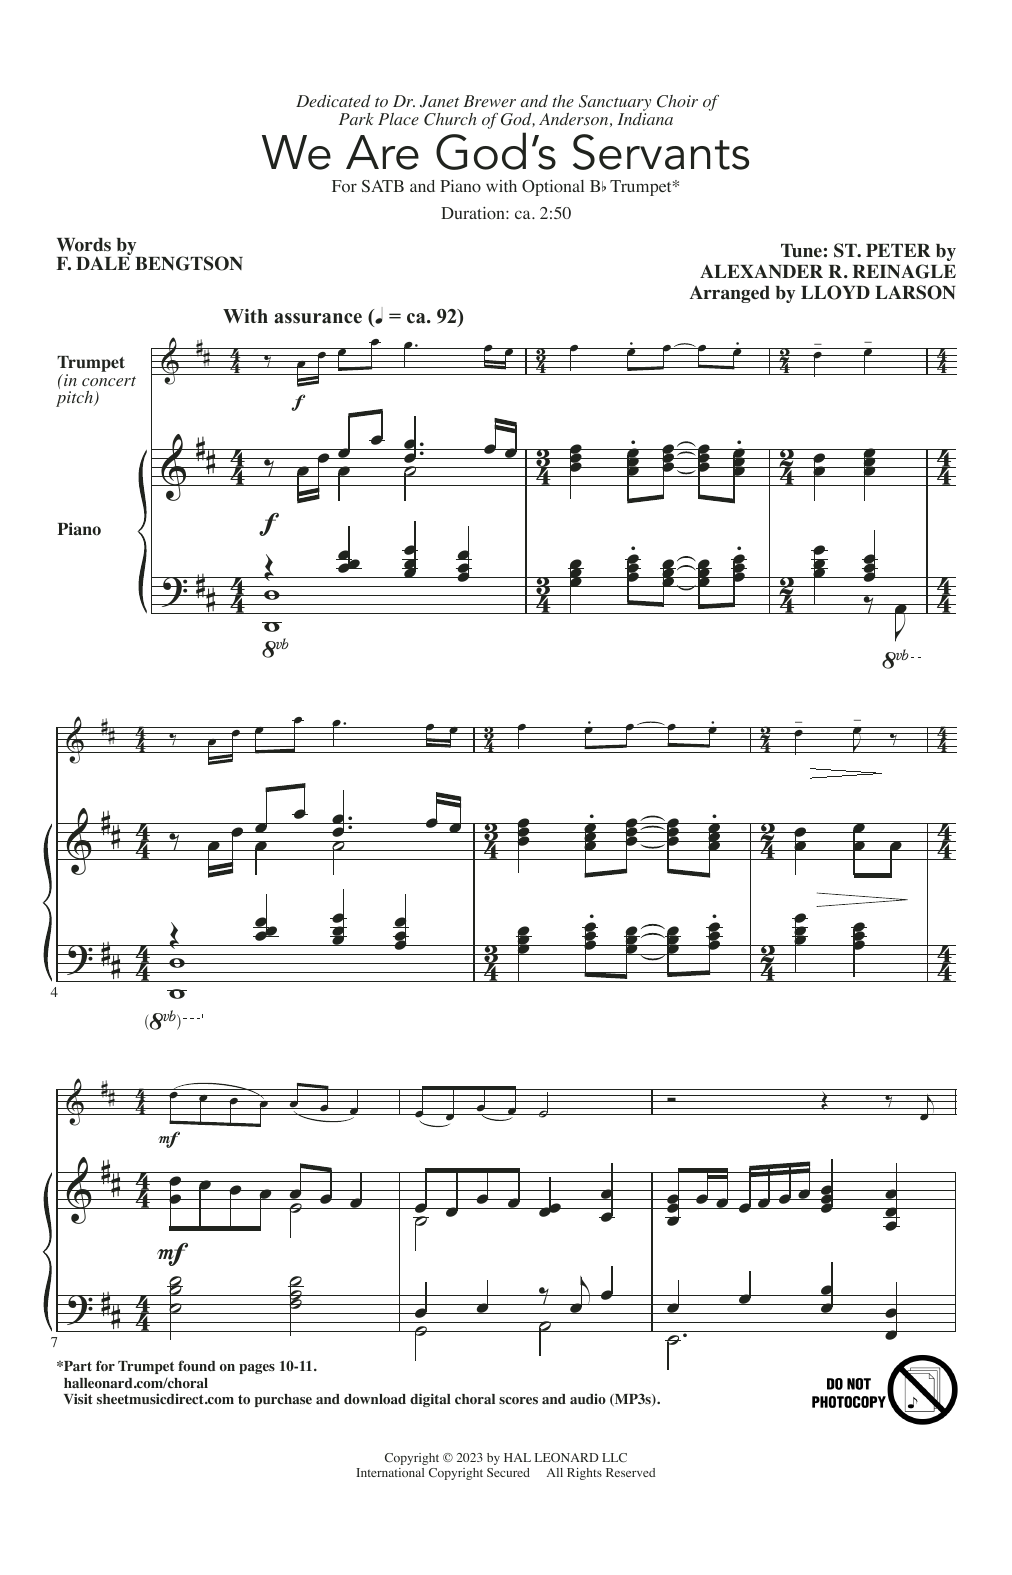 F. Dale Bengtson We Are God's Servants (arr. Lloyd Larson) Sheet Music Notes & Chords for SATB Choir - Download or Print PDF